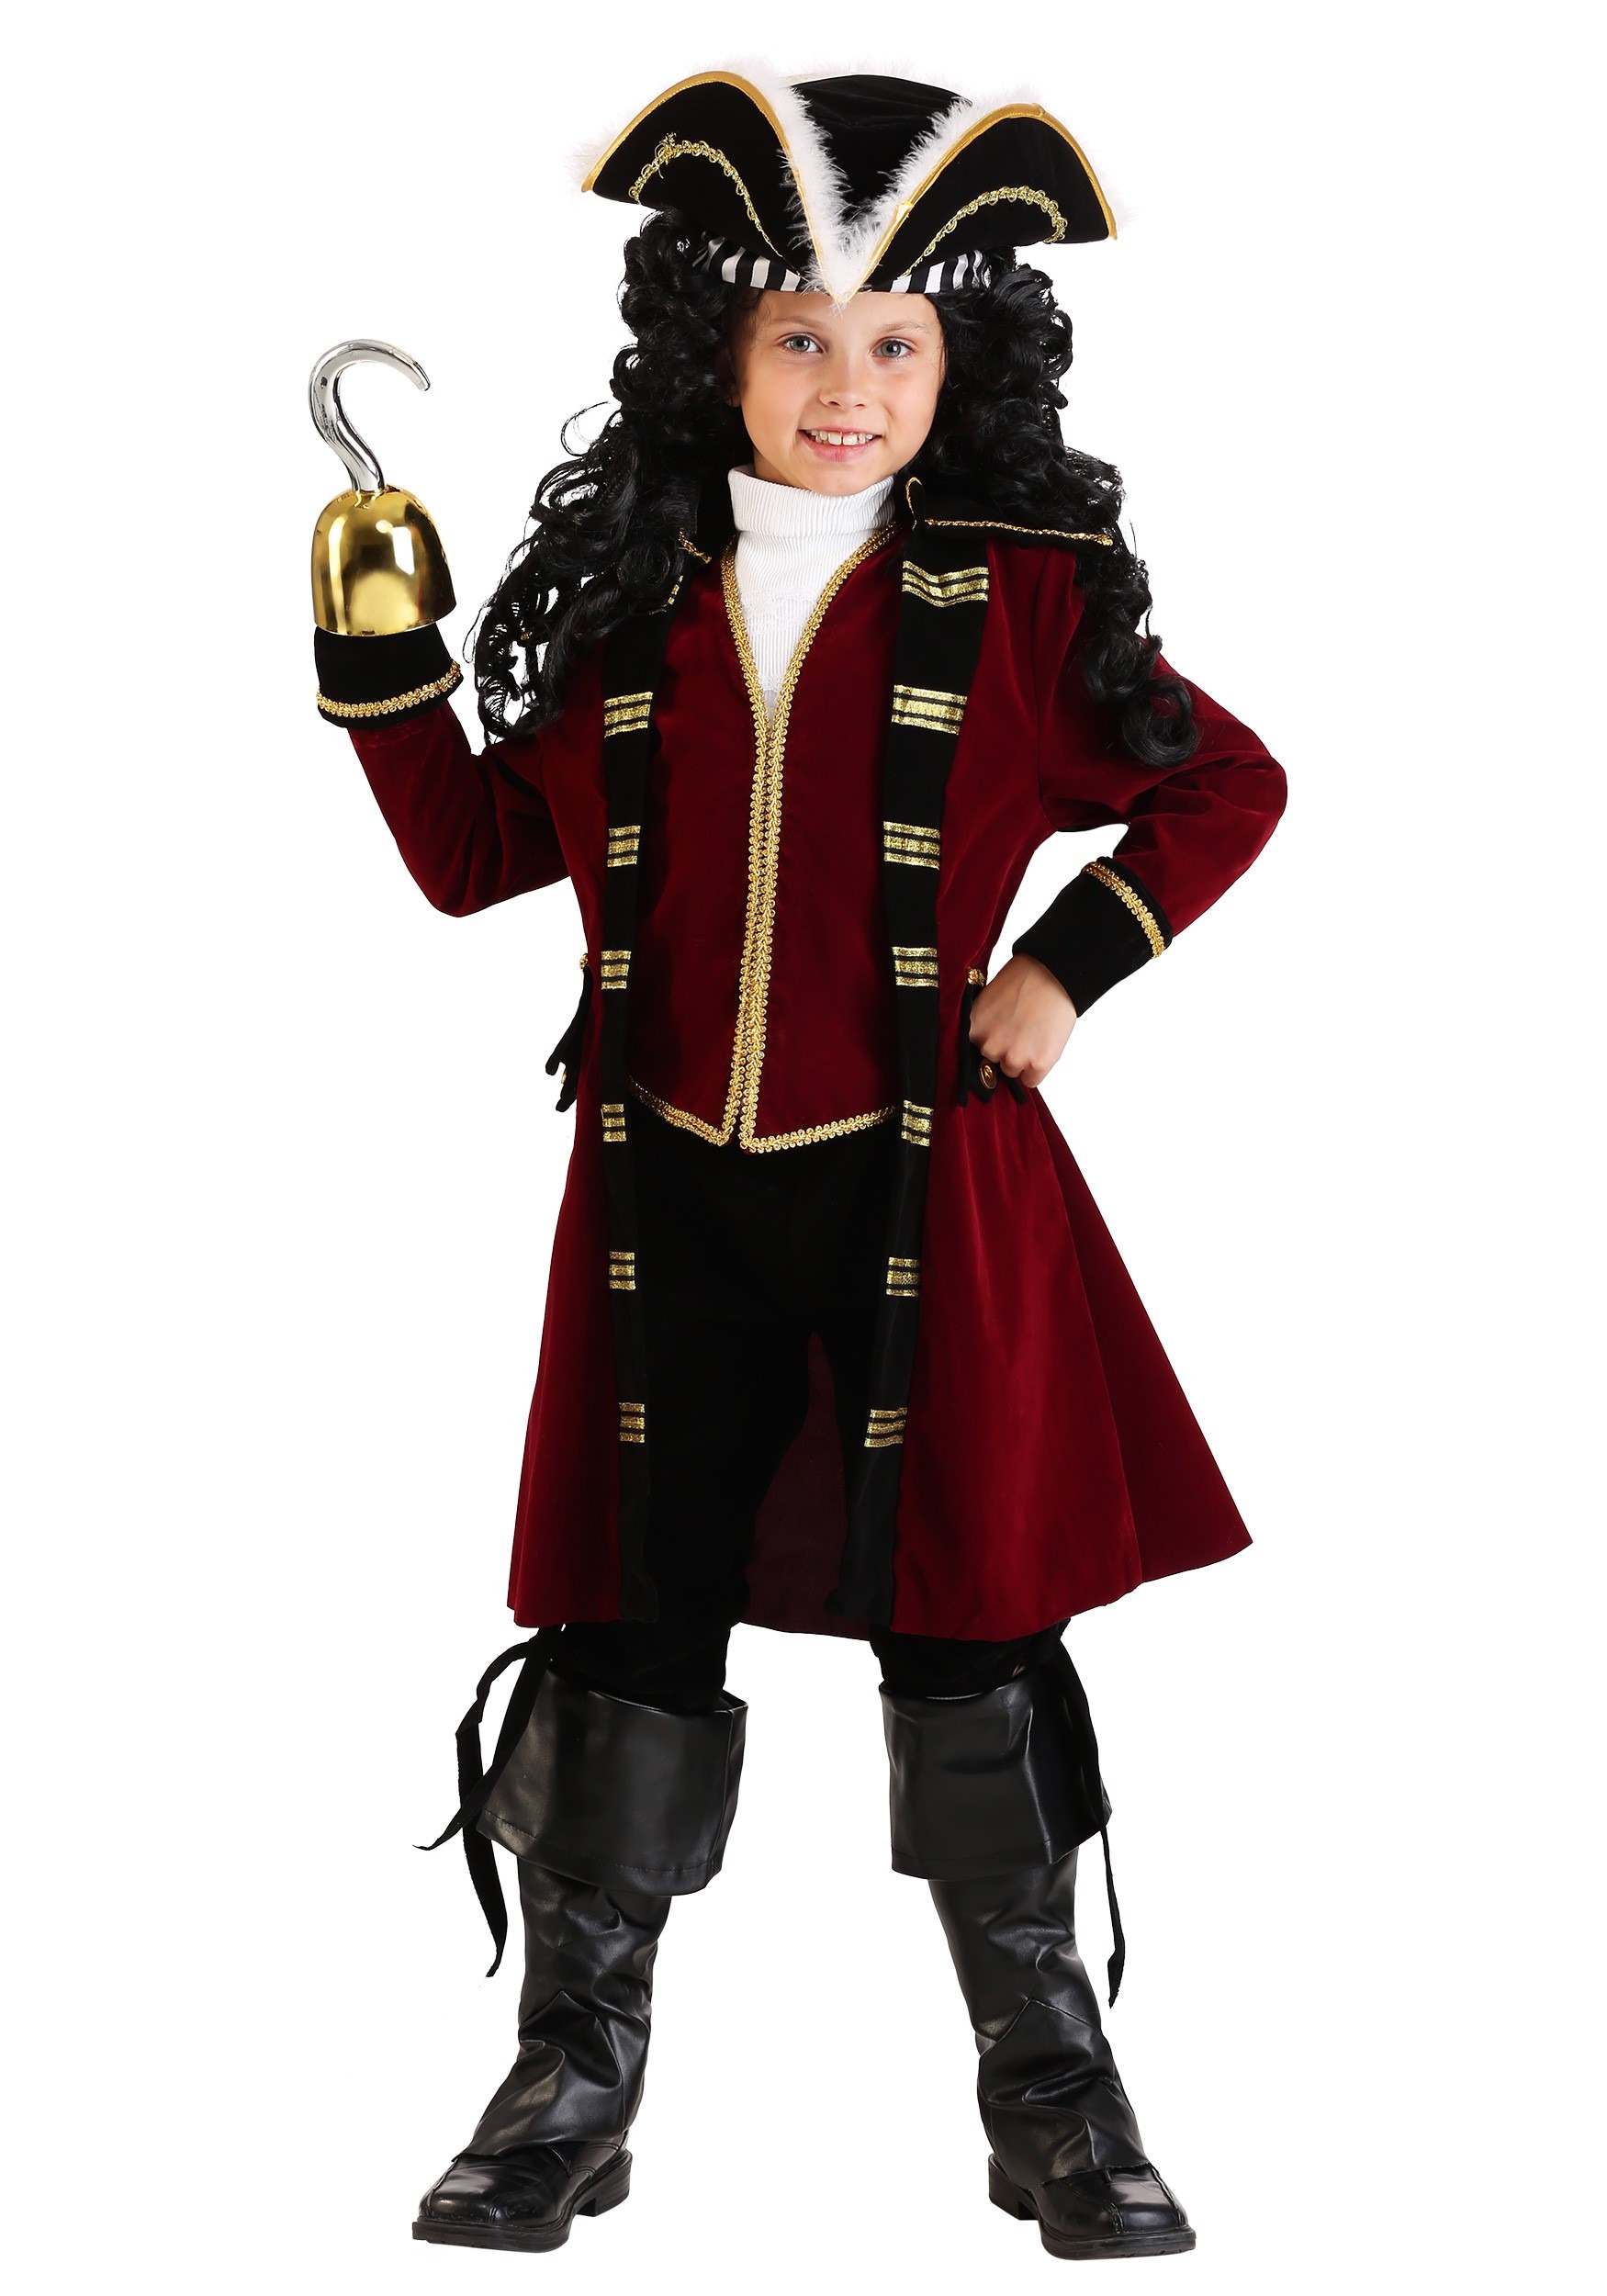 https://images.halloween.com/products/4884/1-1/child-deluxe-captain-hook-costume-update-main.jpg